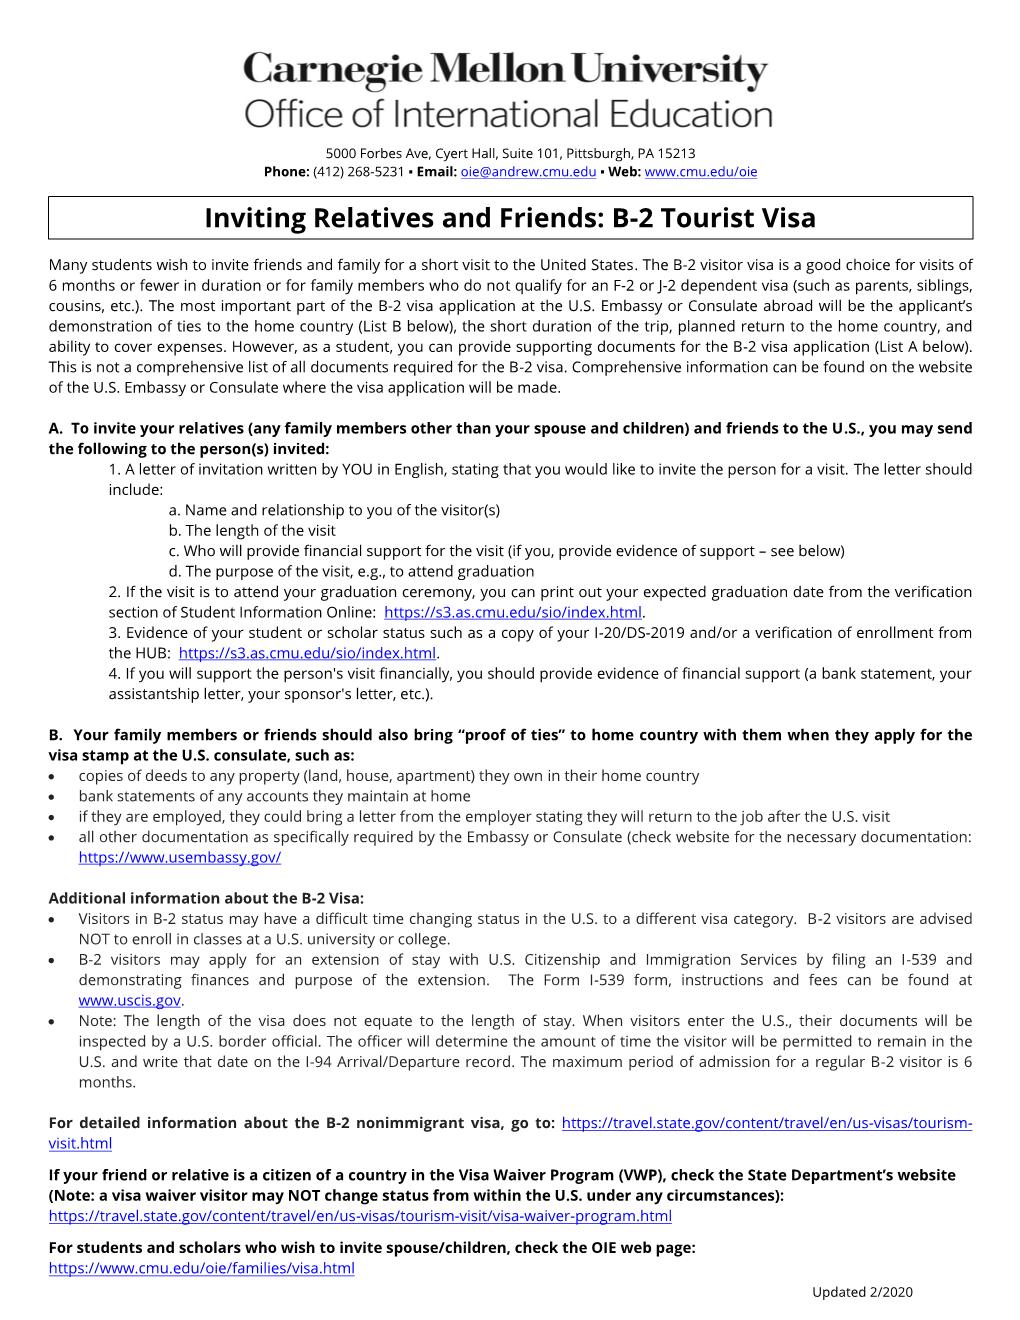 Inviting Relatives & Friends: B-2 Tourist Visa